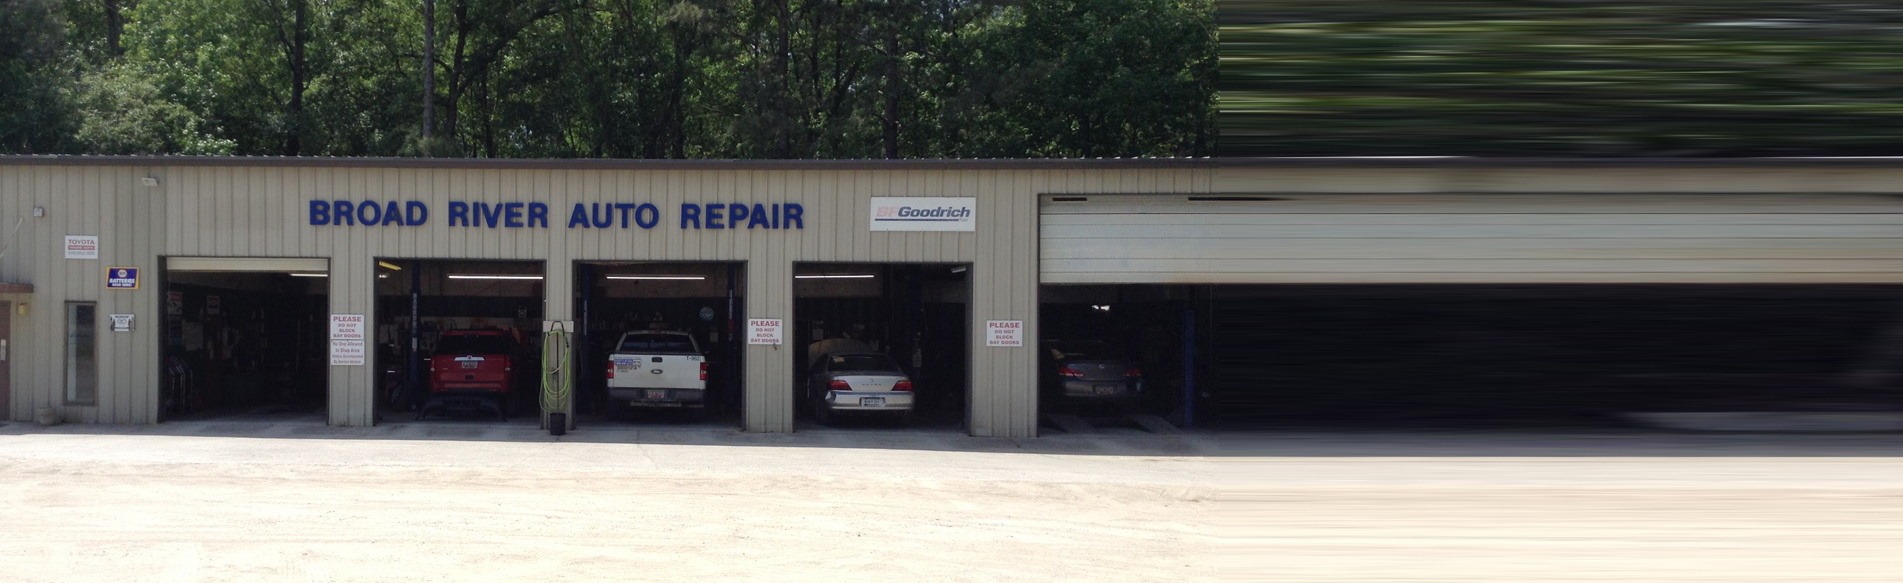 Auto Repair Columbia Sc Car Service Complete Car Care Inc